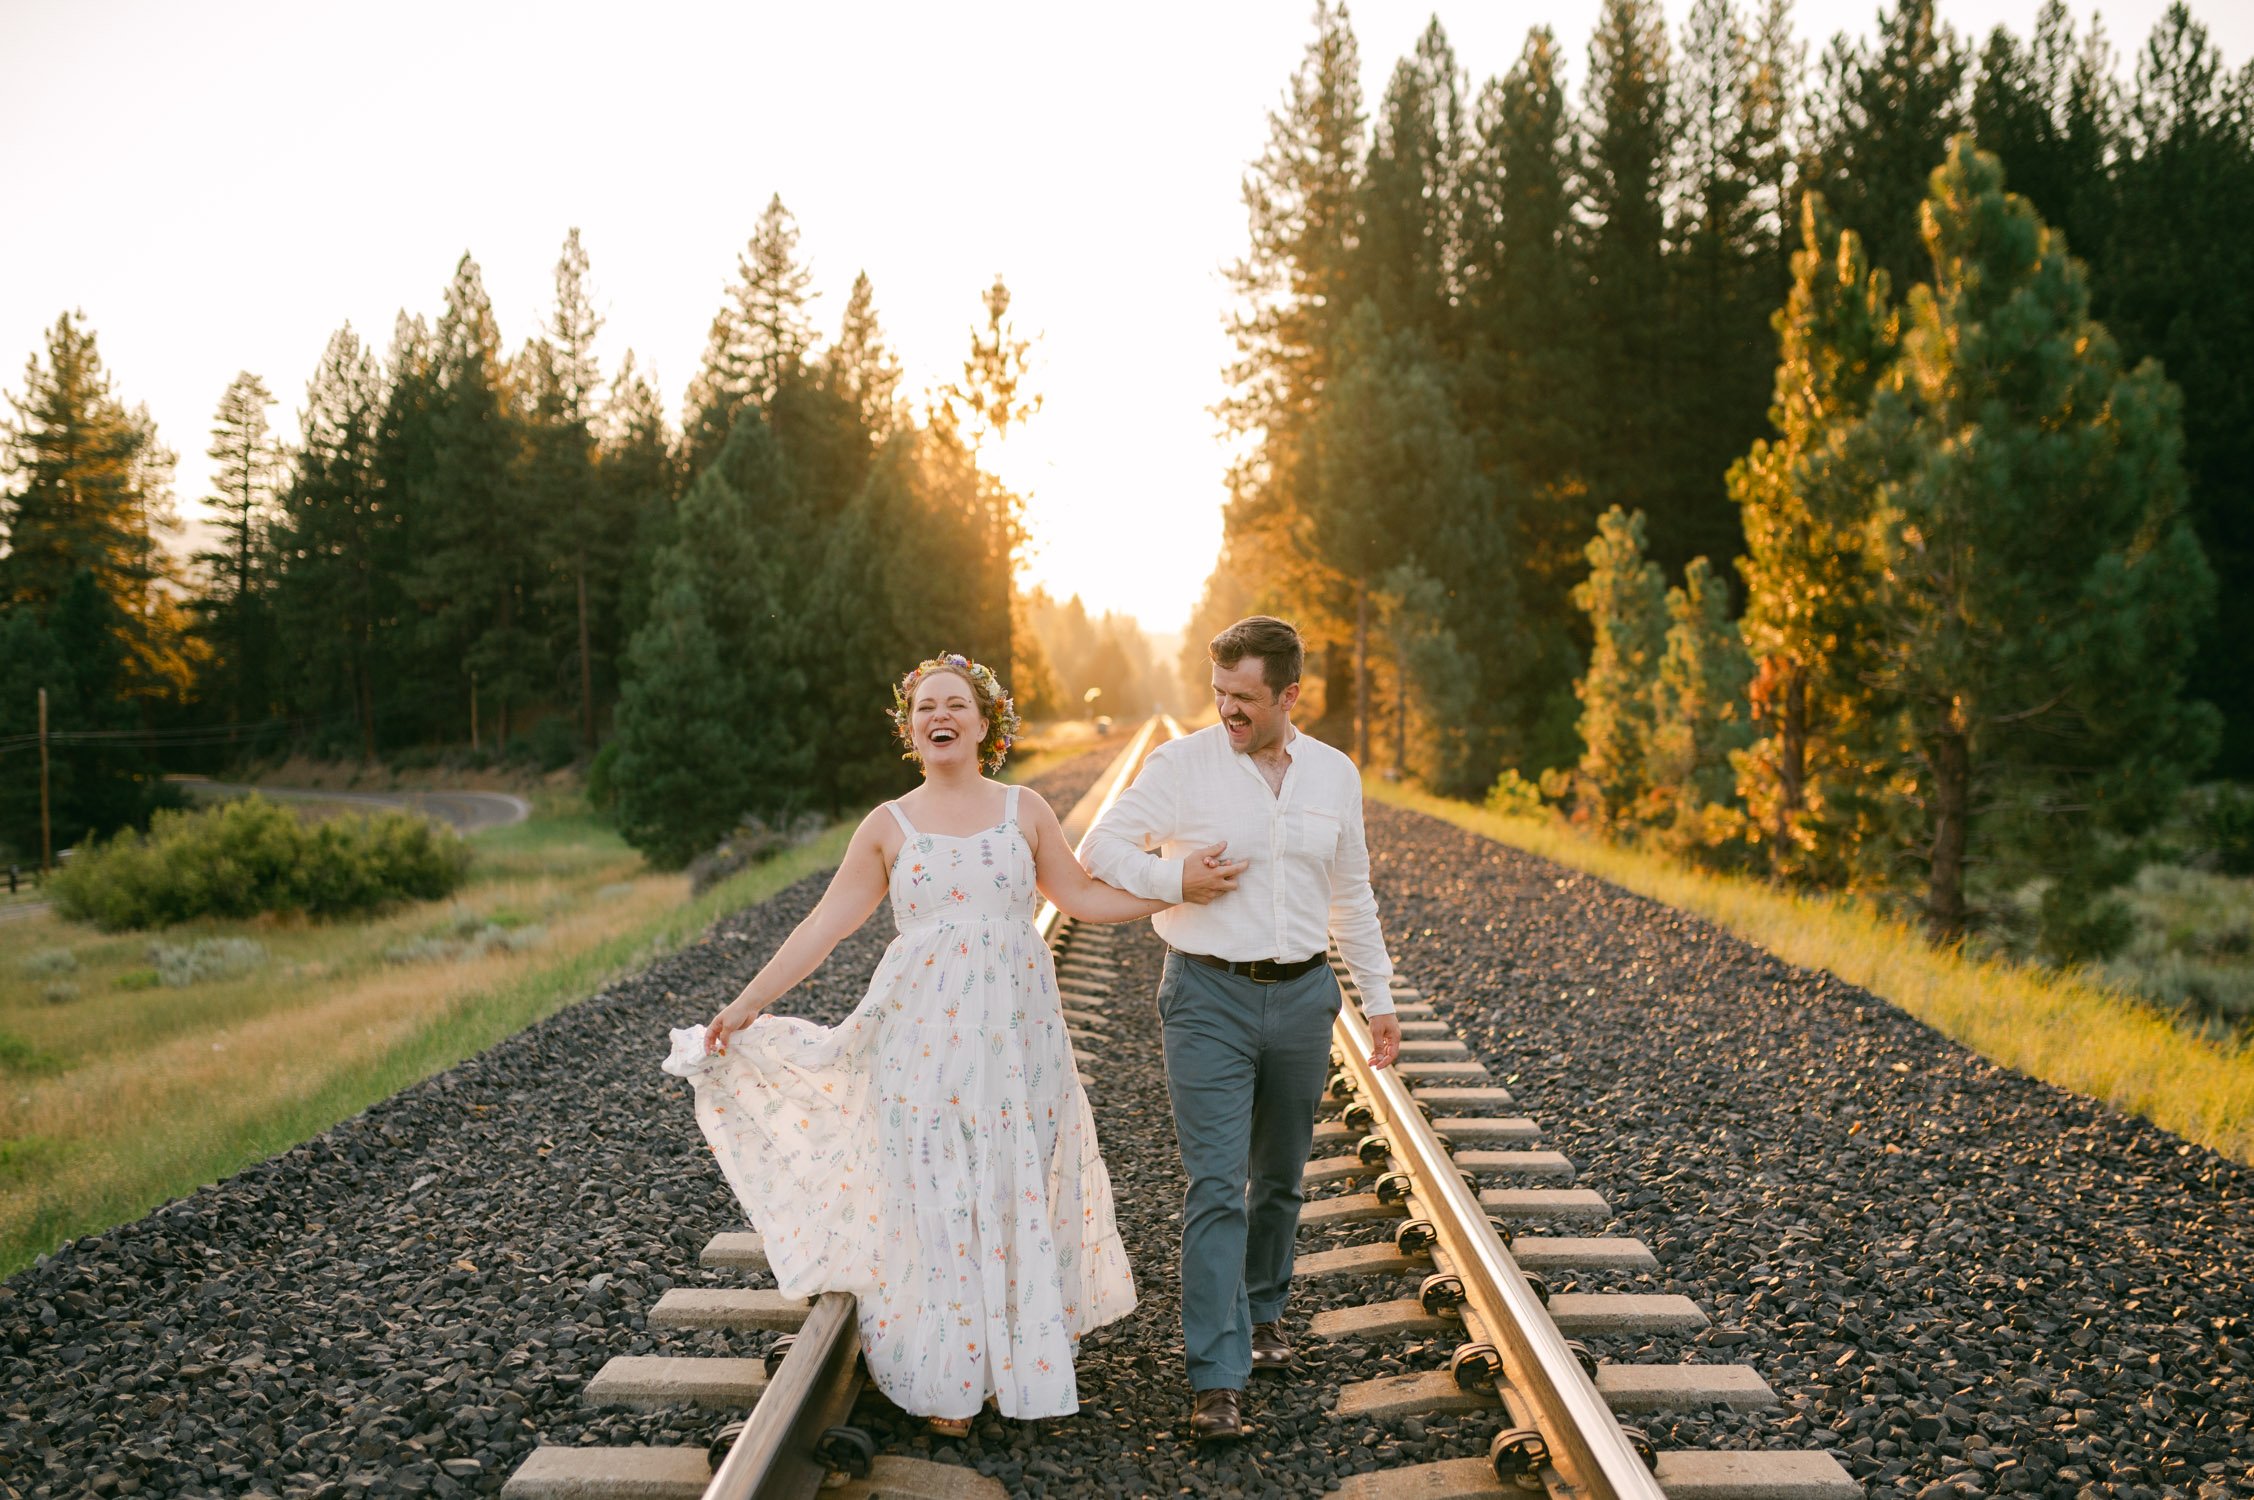 graeagle corner barn wedding, photo of the newlywed couple walking on the railway during their sunset photoshoot